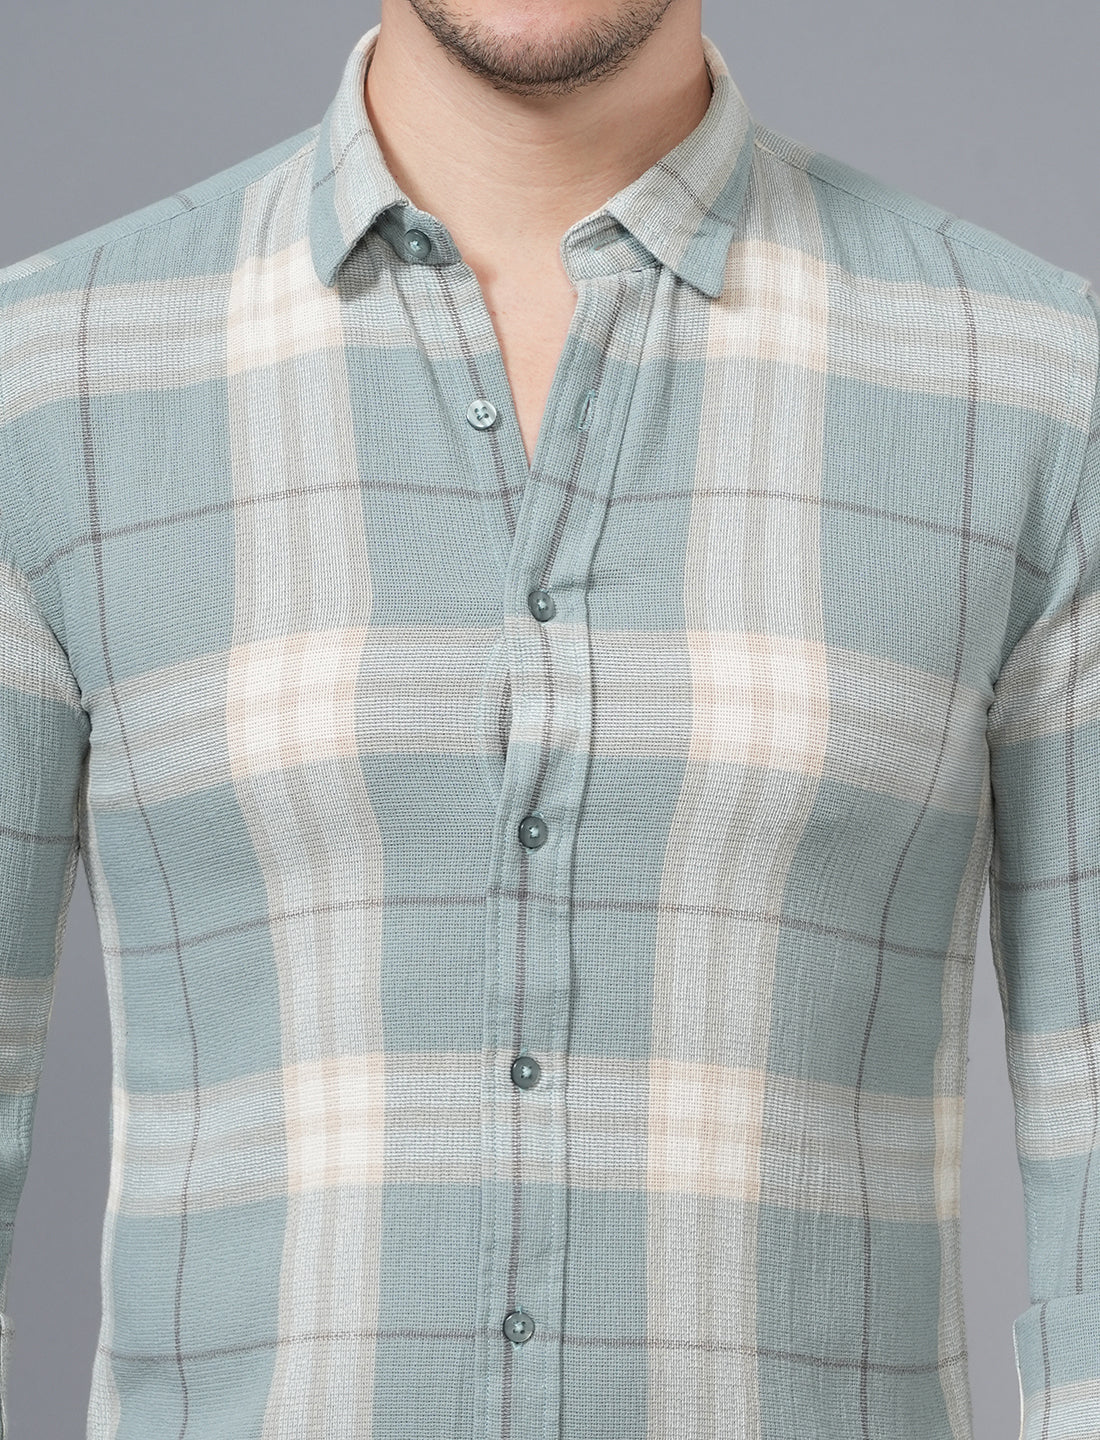 Shop Green Woven Cotton Checked Men's Shirt Online